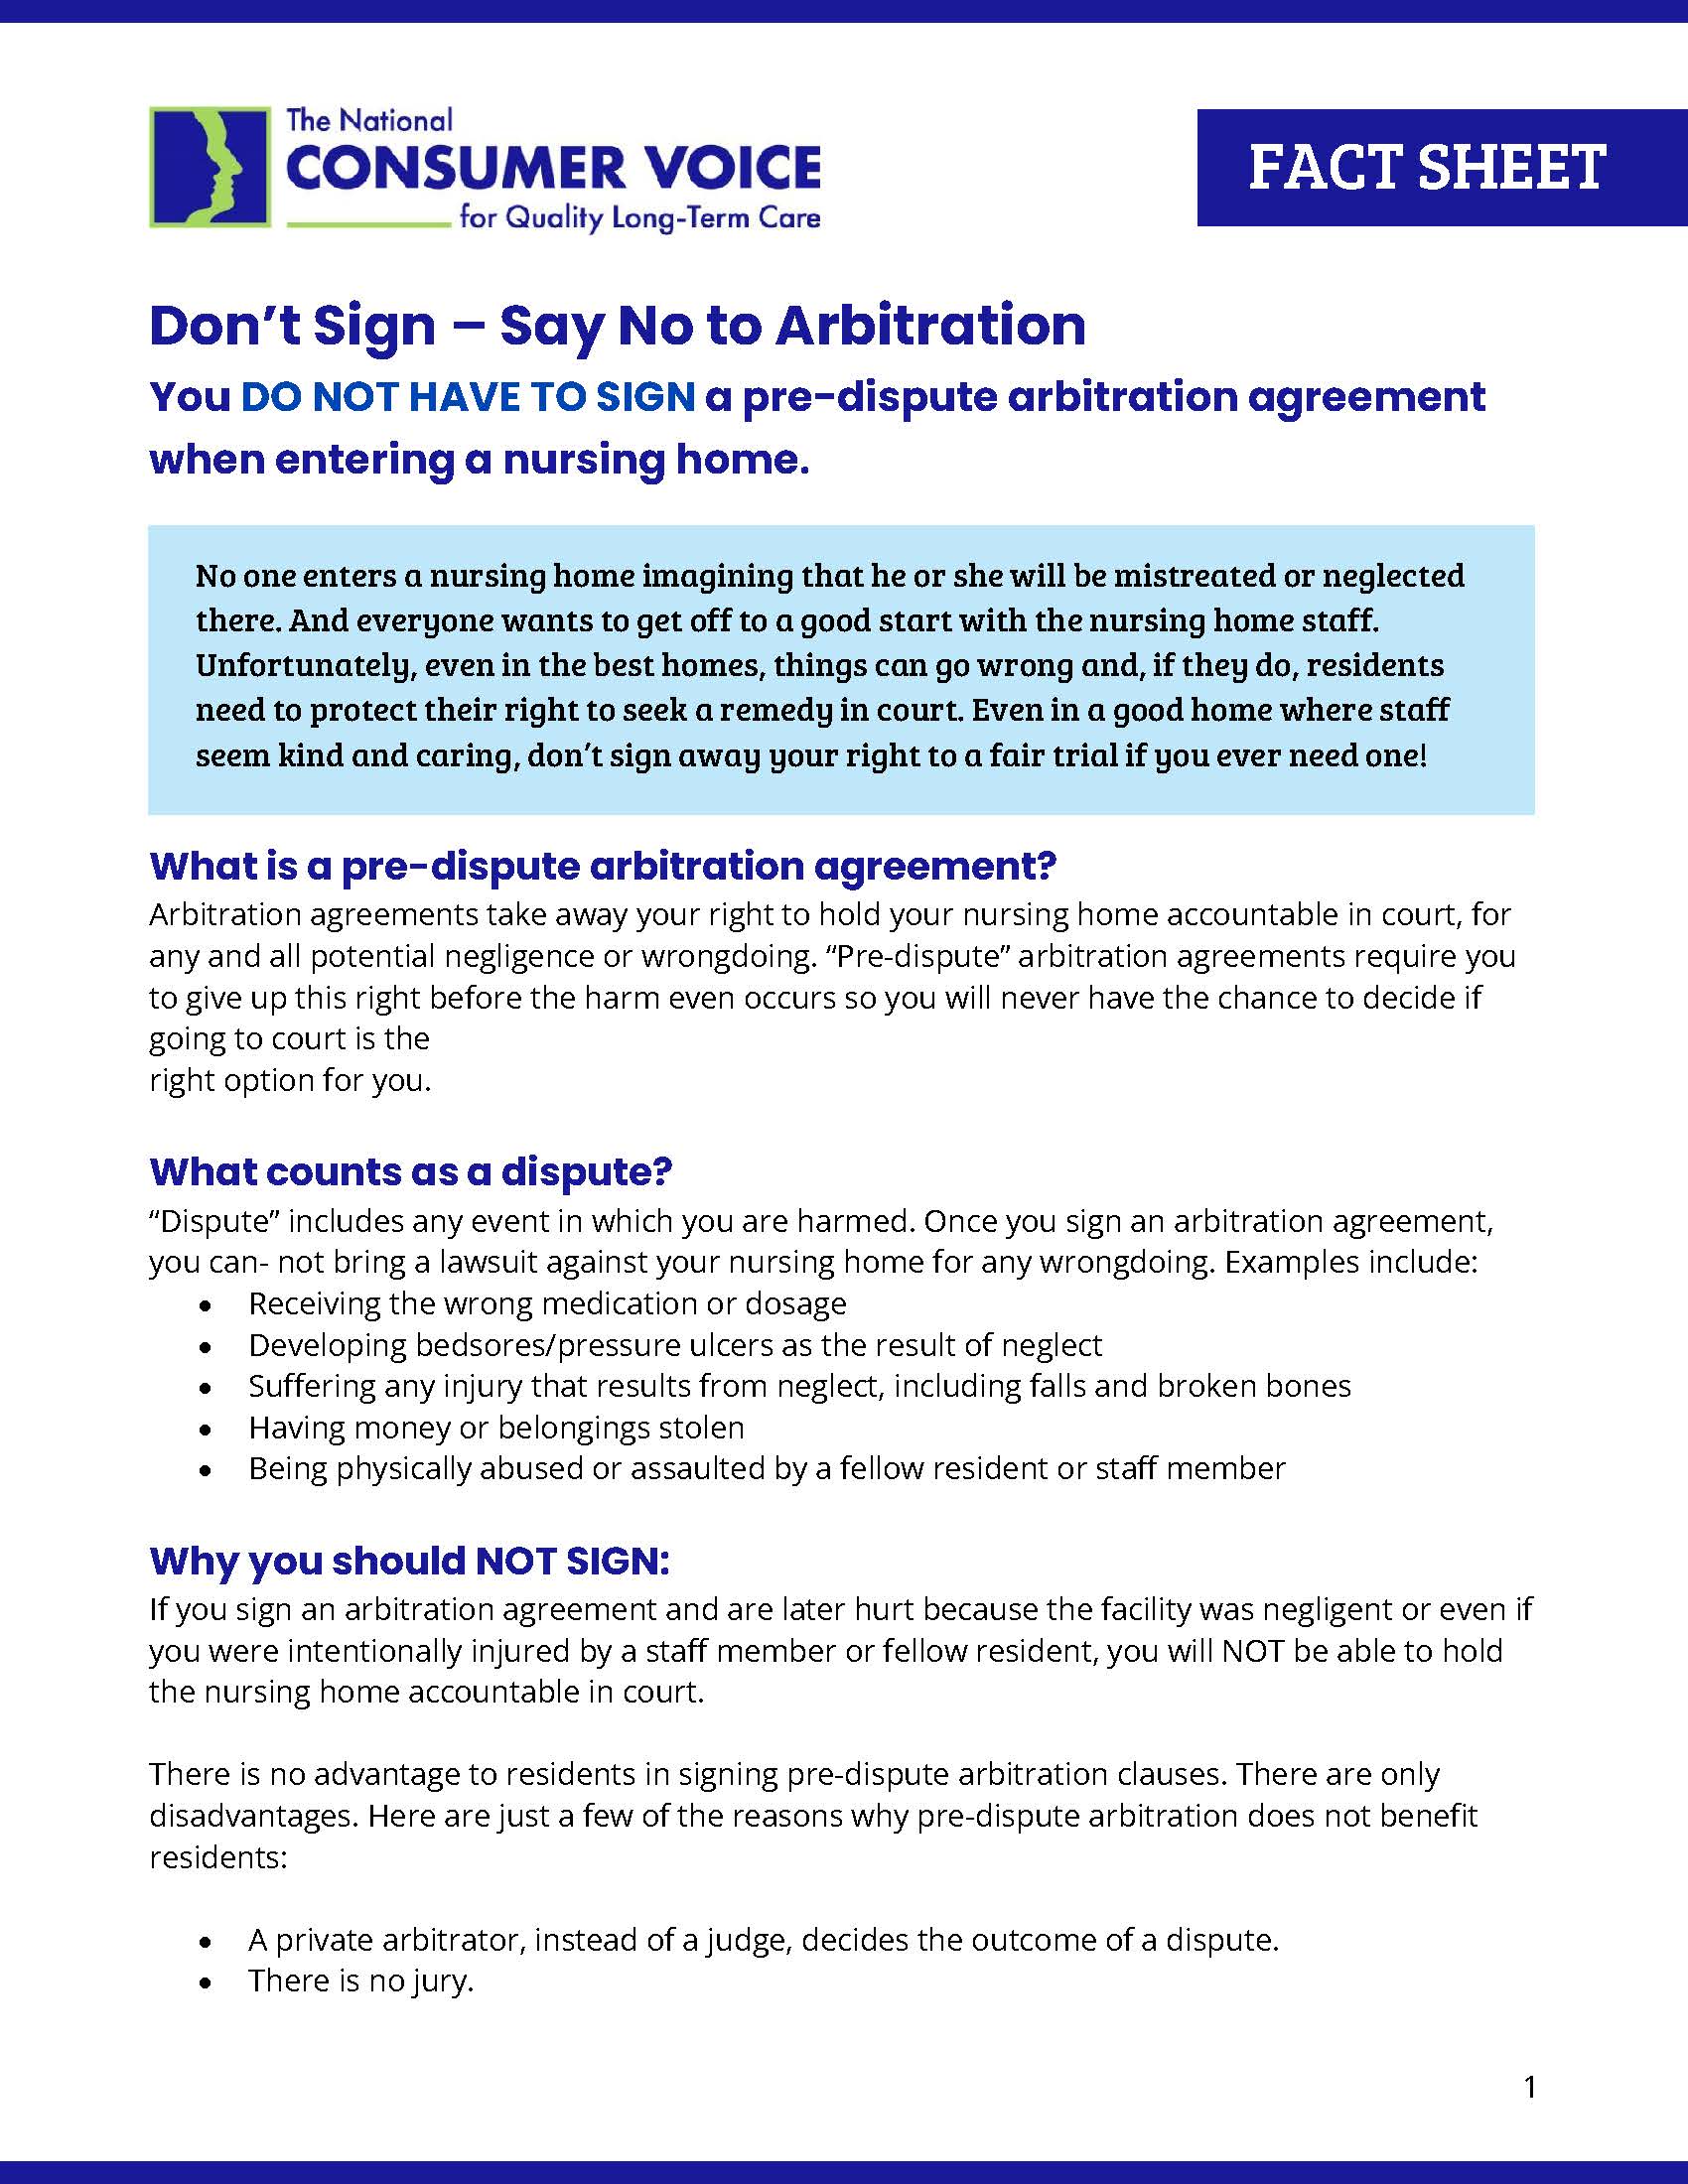 Arbitration fact sheet